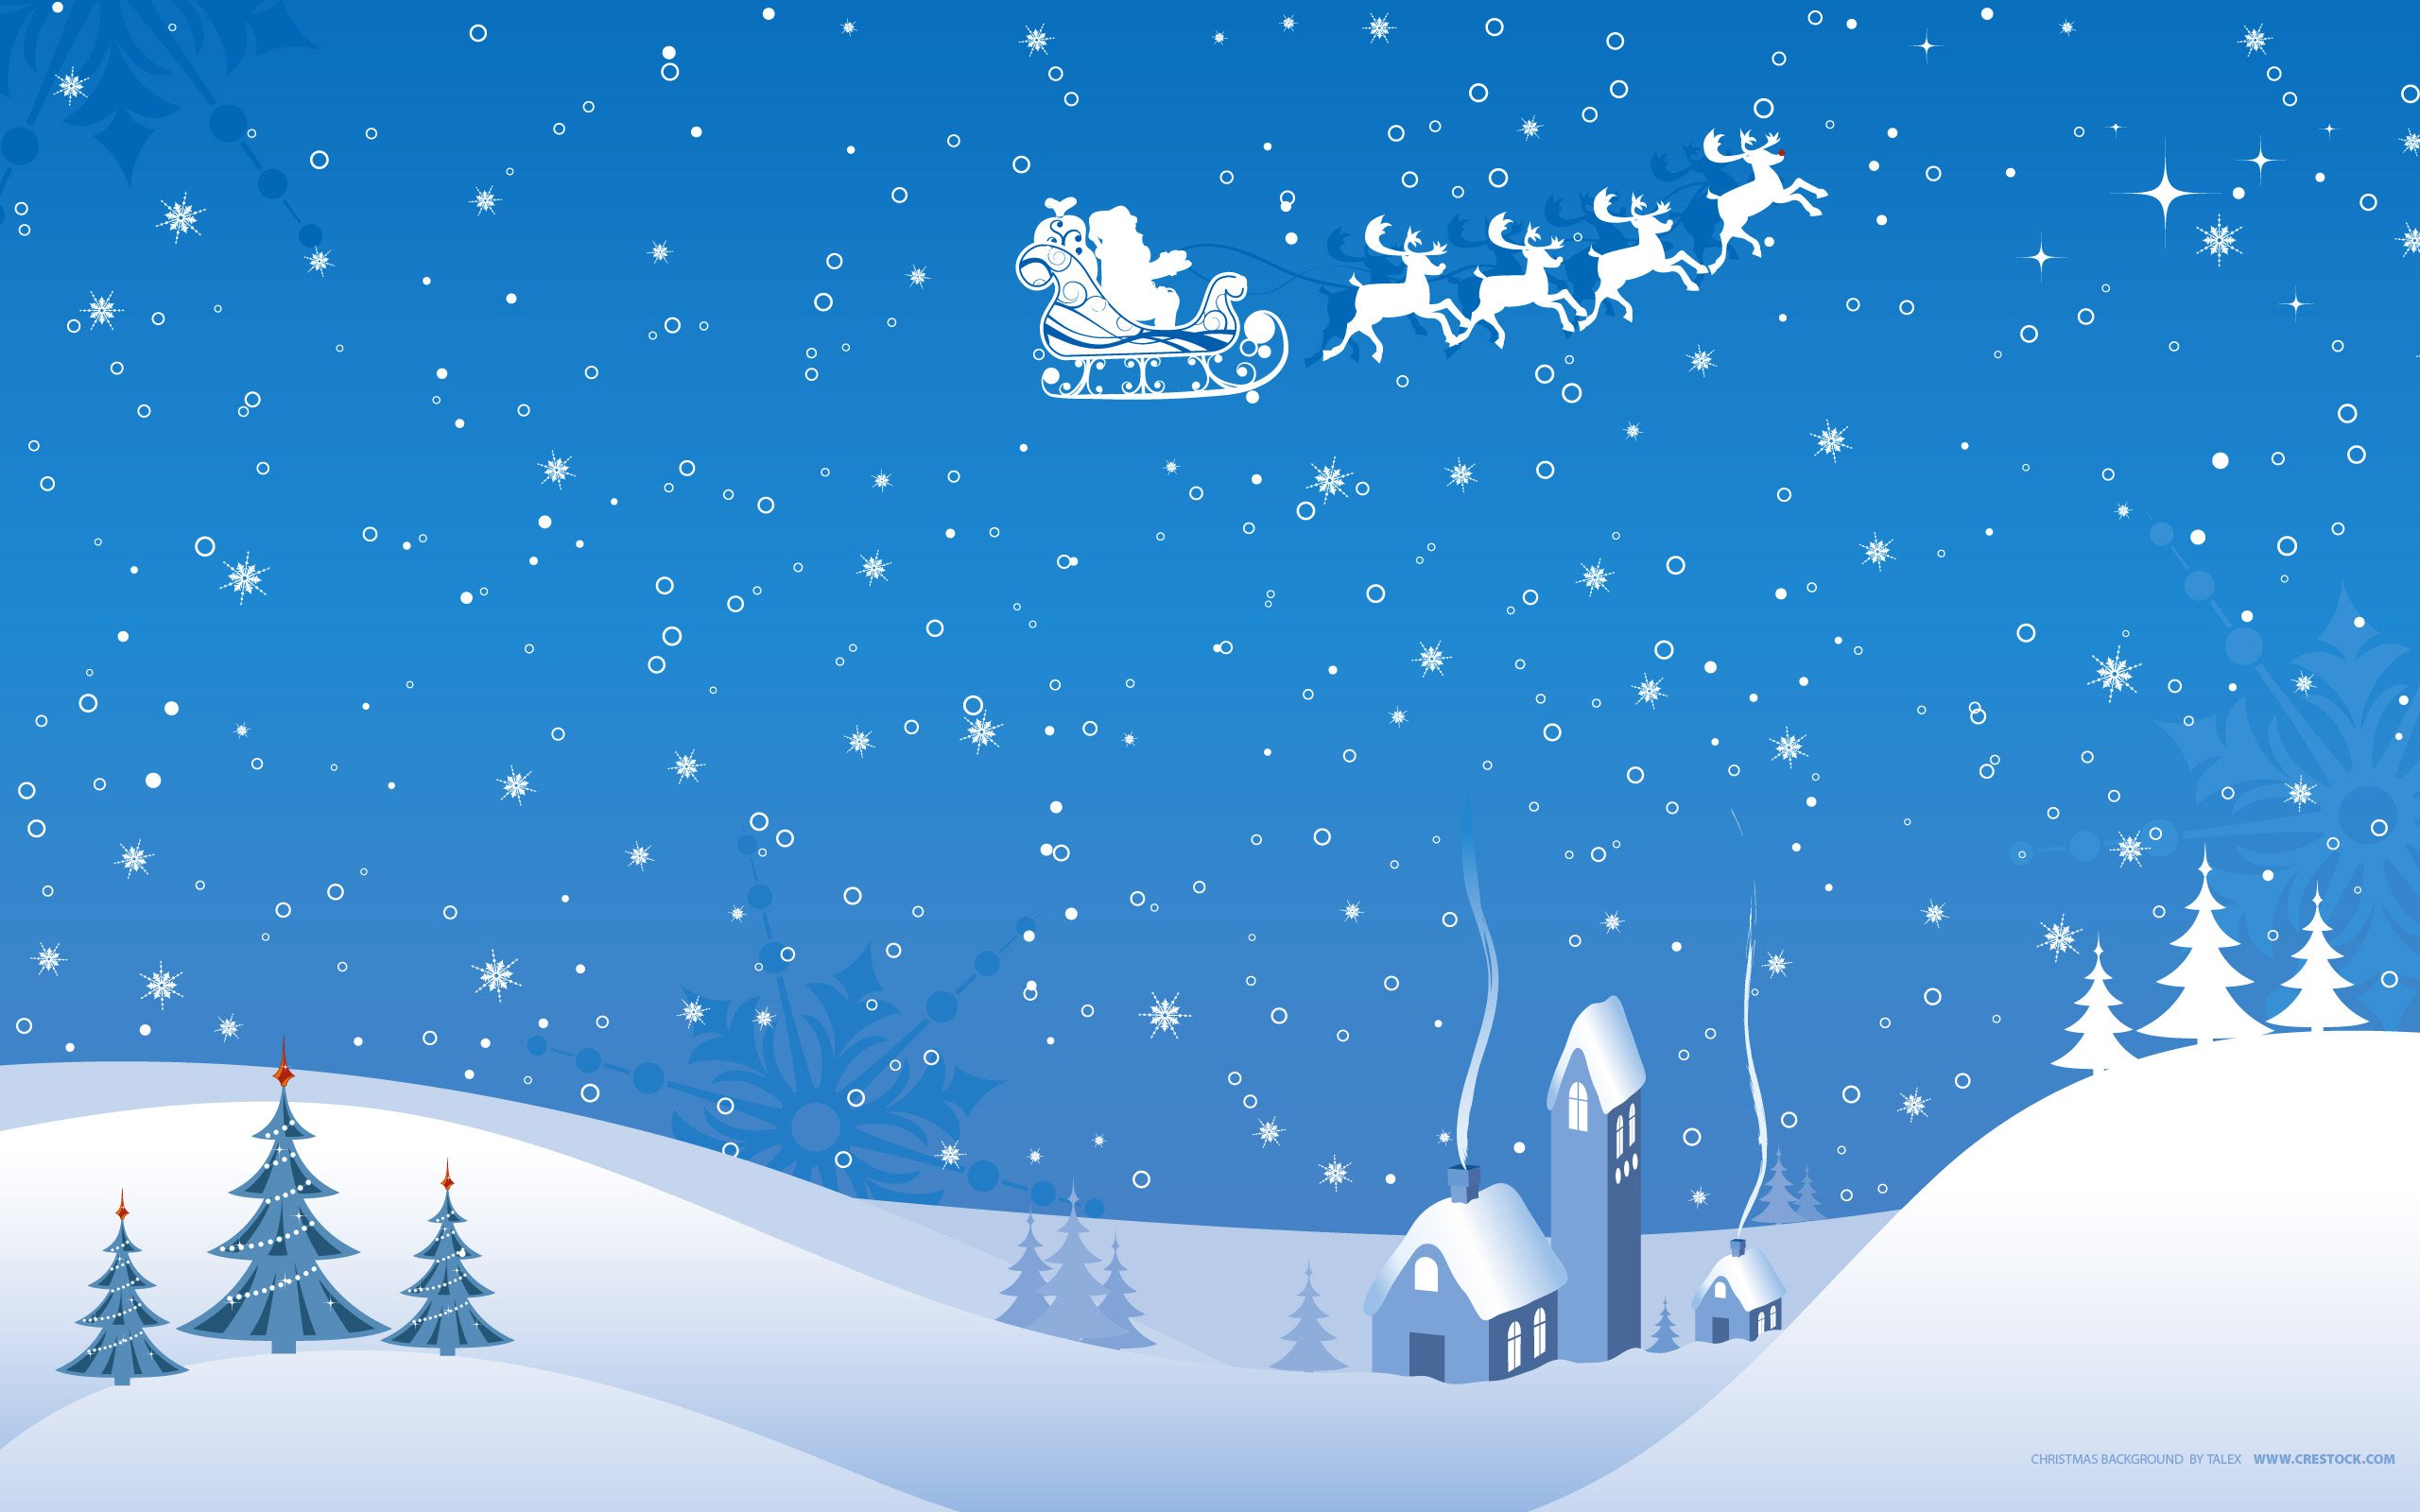 72+] Winter Christmas Desktop Backgrounds - WallpaperSafari